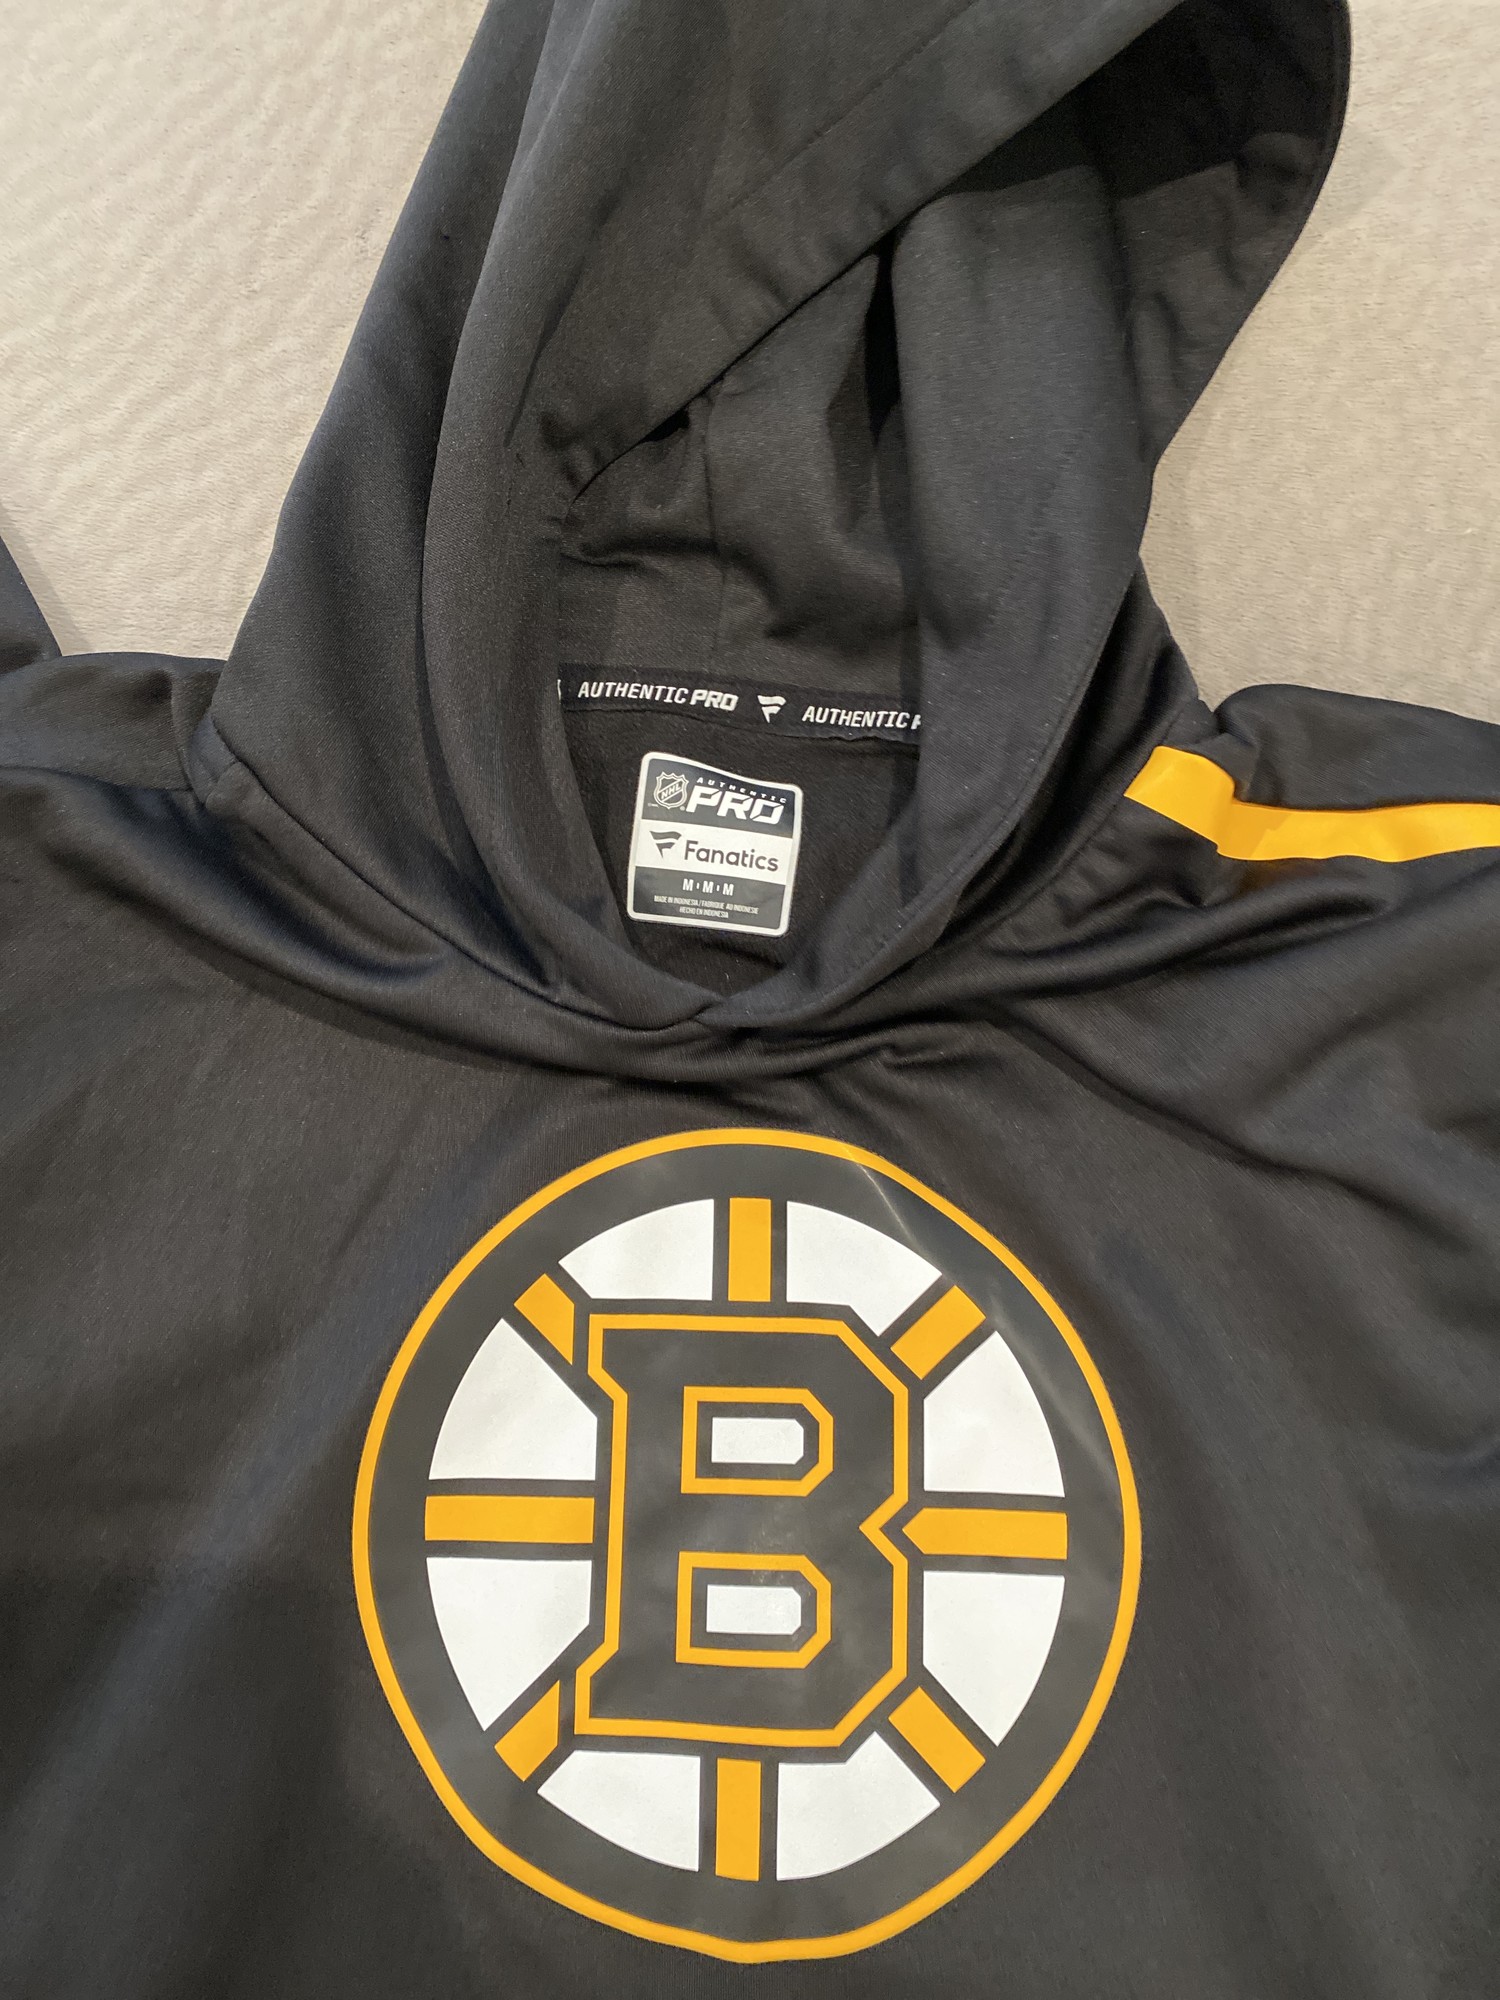 Boston Bruins - Pro Sweatshirts